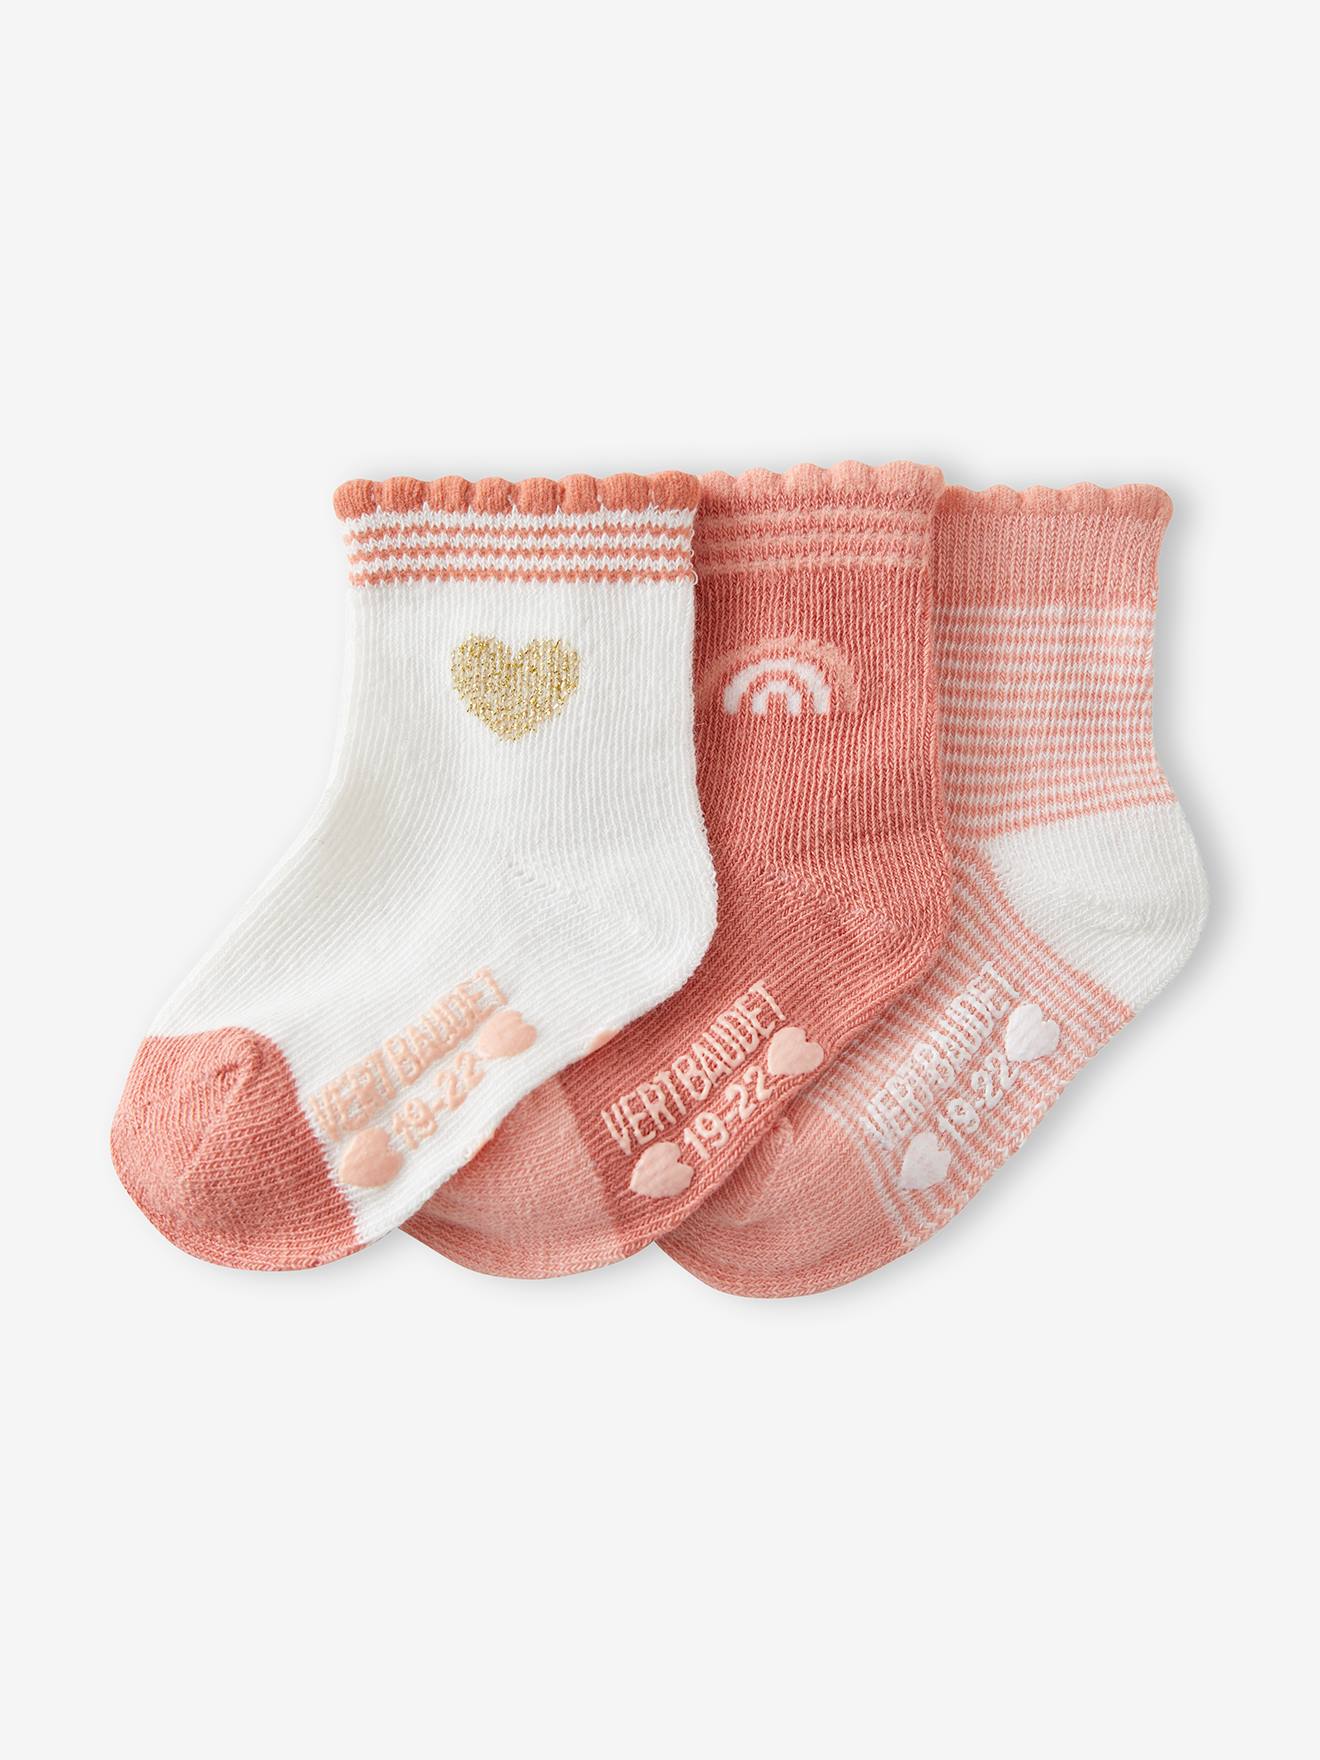 DEBAIJIA 3 Pair Set Unisex Baby Socks Kids Long Tights Anti-slip Coton Socks for 0-3 Years Newborn Toddler Warm Fluffy Confortable Spring/Summer Winter/Autum Socks 